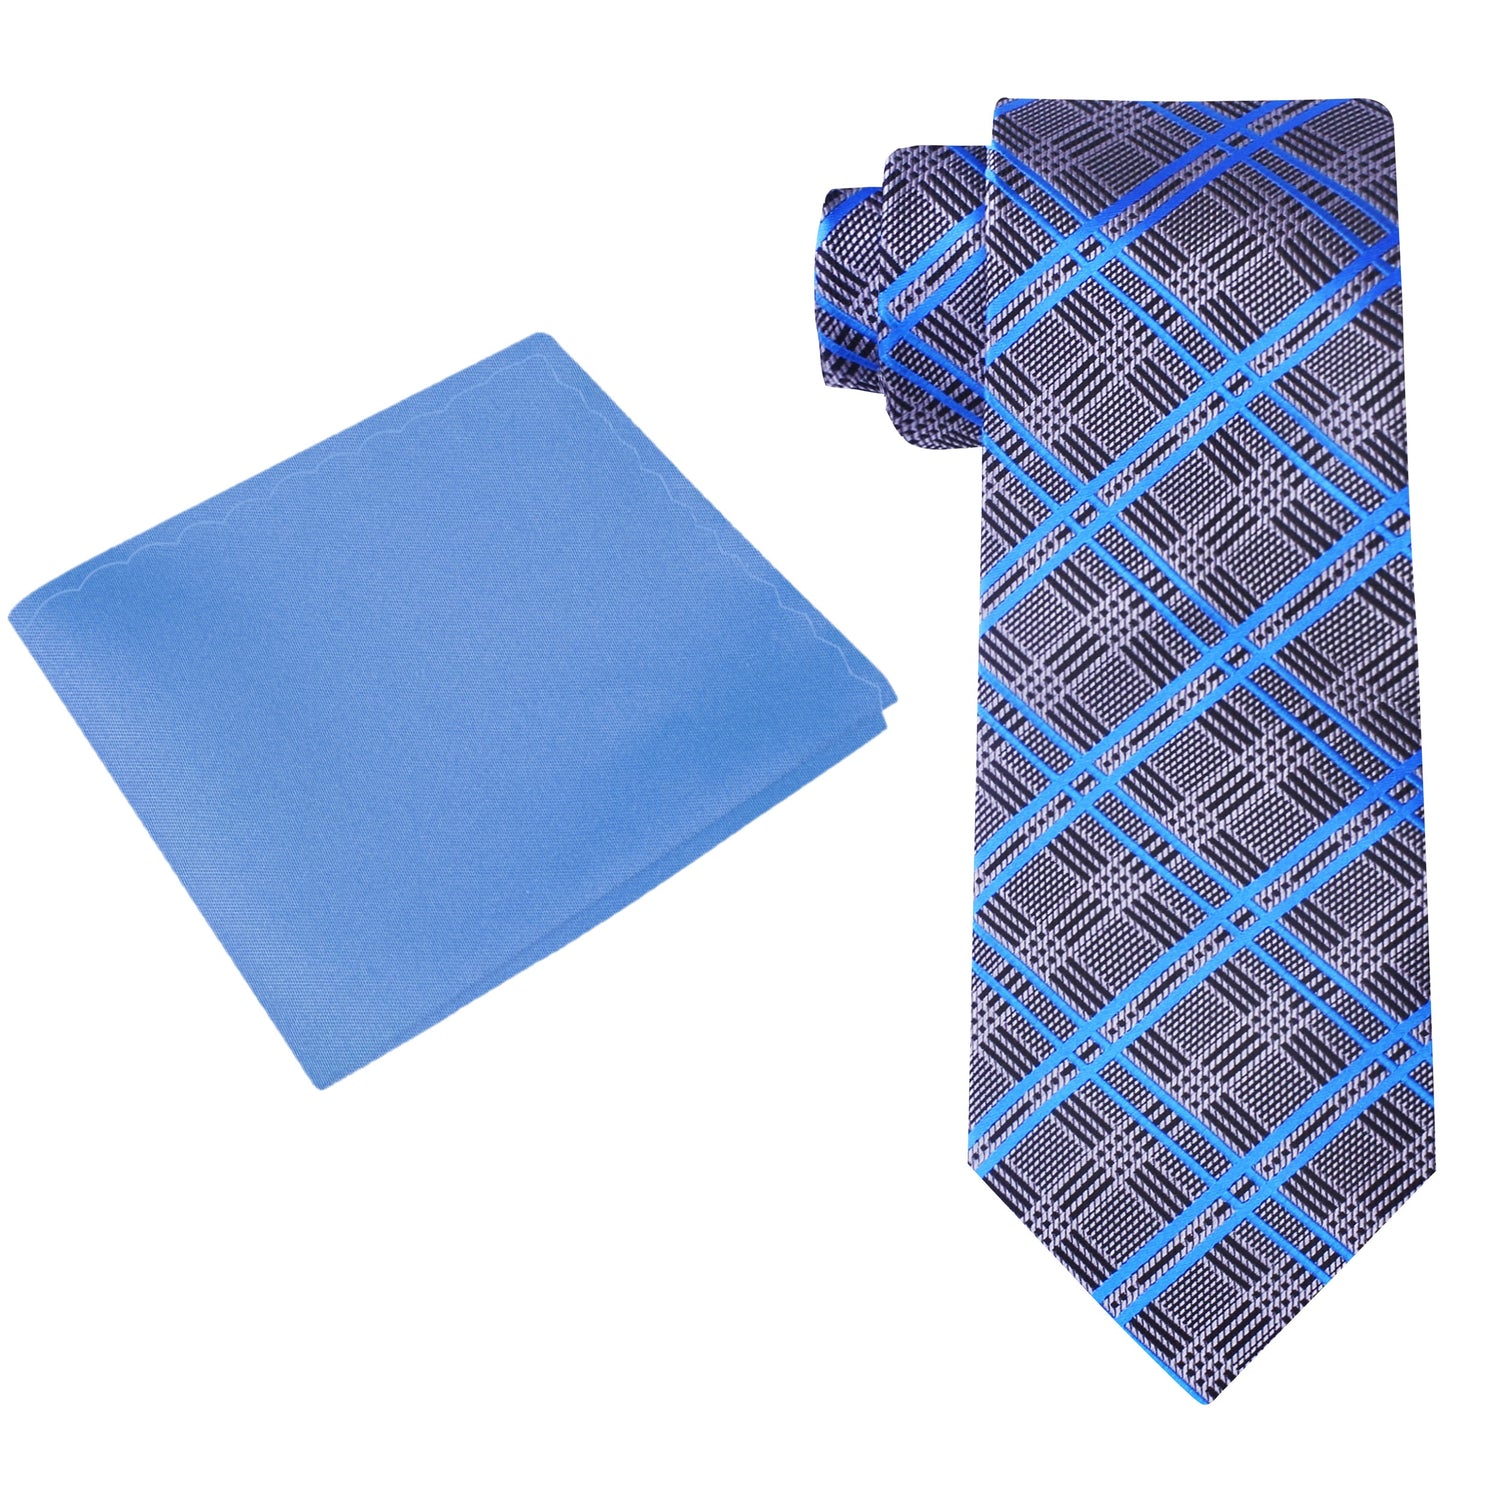 Alt View: Grey, Blue, Black Plaid Tie and Blue Square